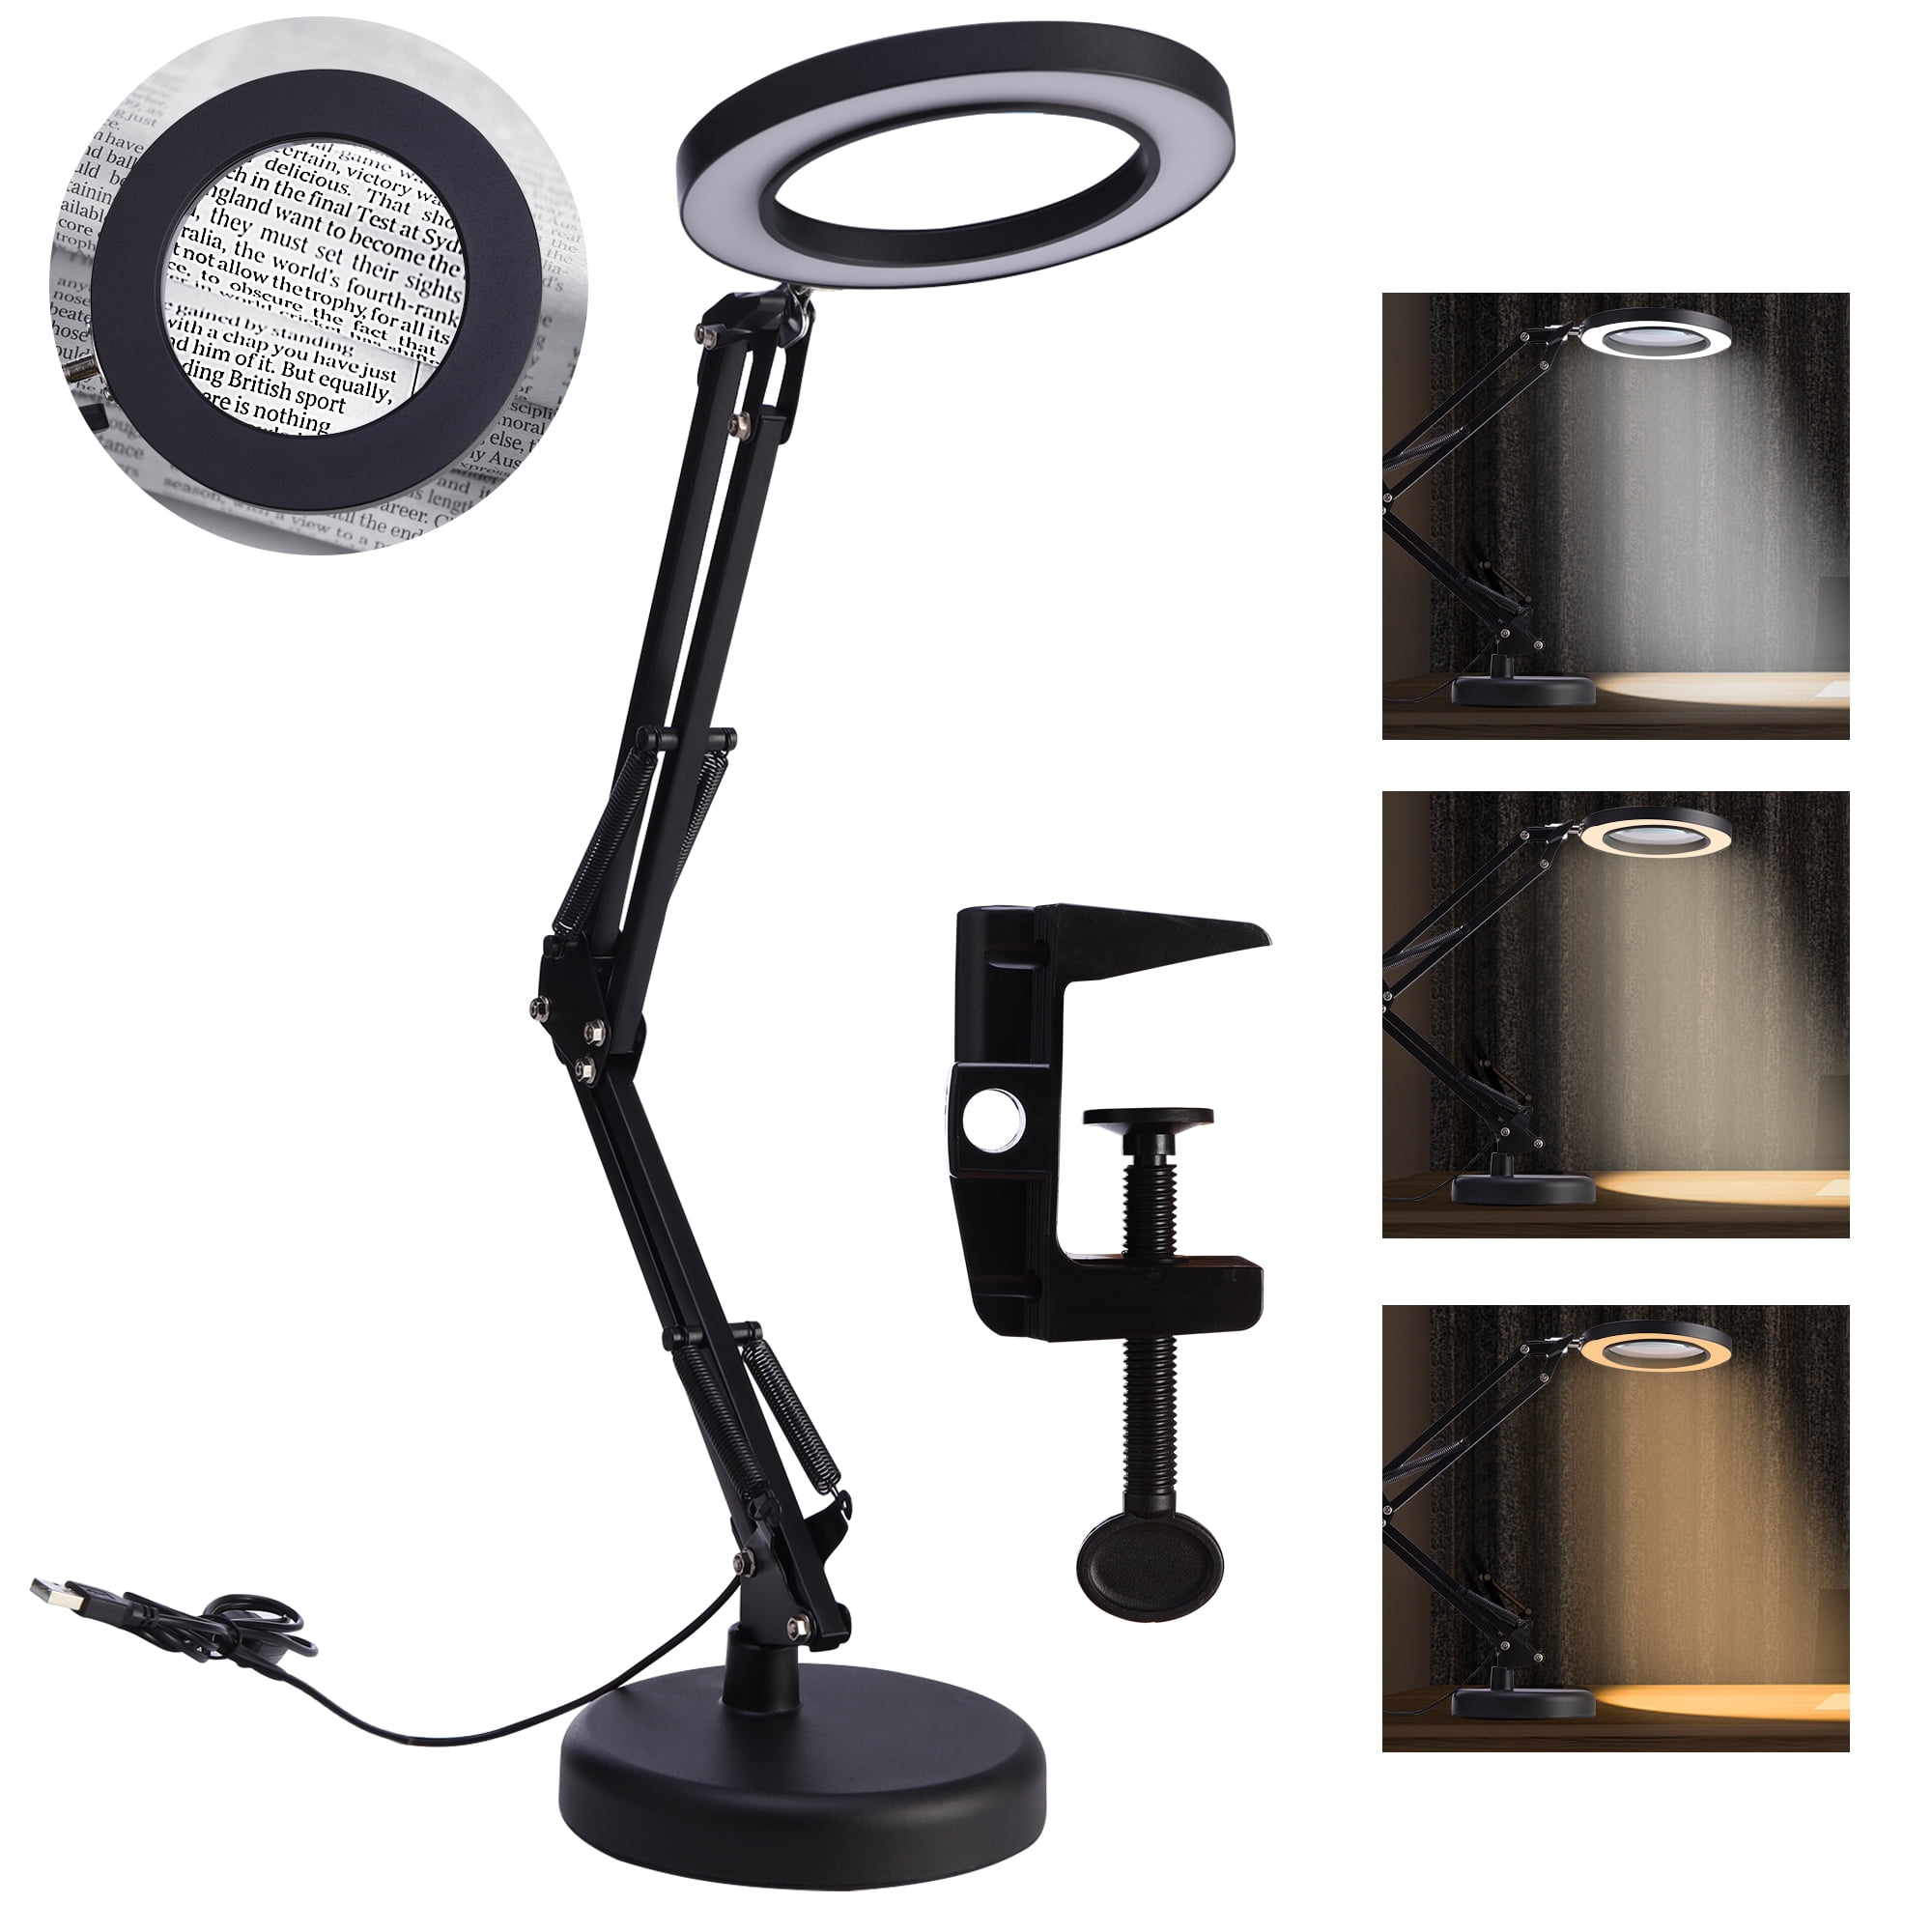 The Professional's Floor Standing Magnifier Lamp - Hammacher Schlemmer